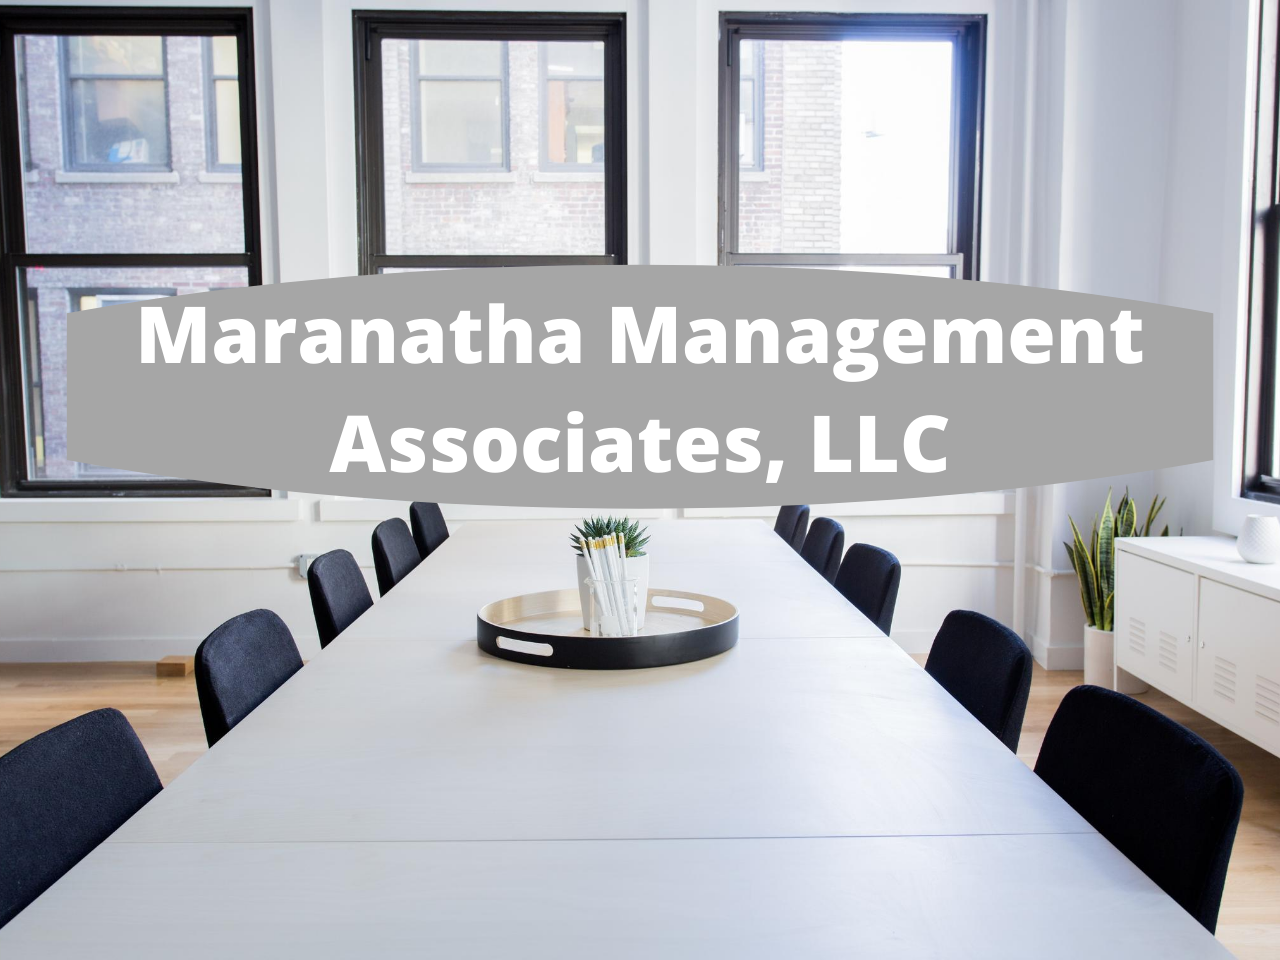 Maranatha Management Associates, LLC